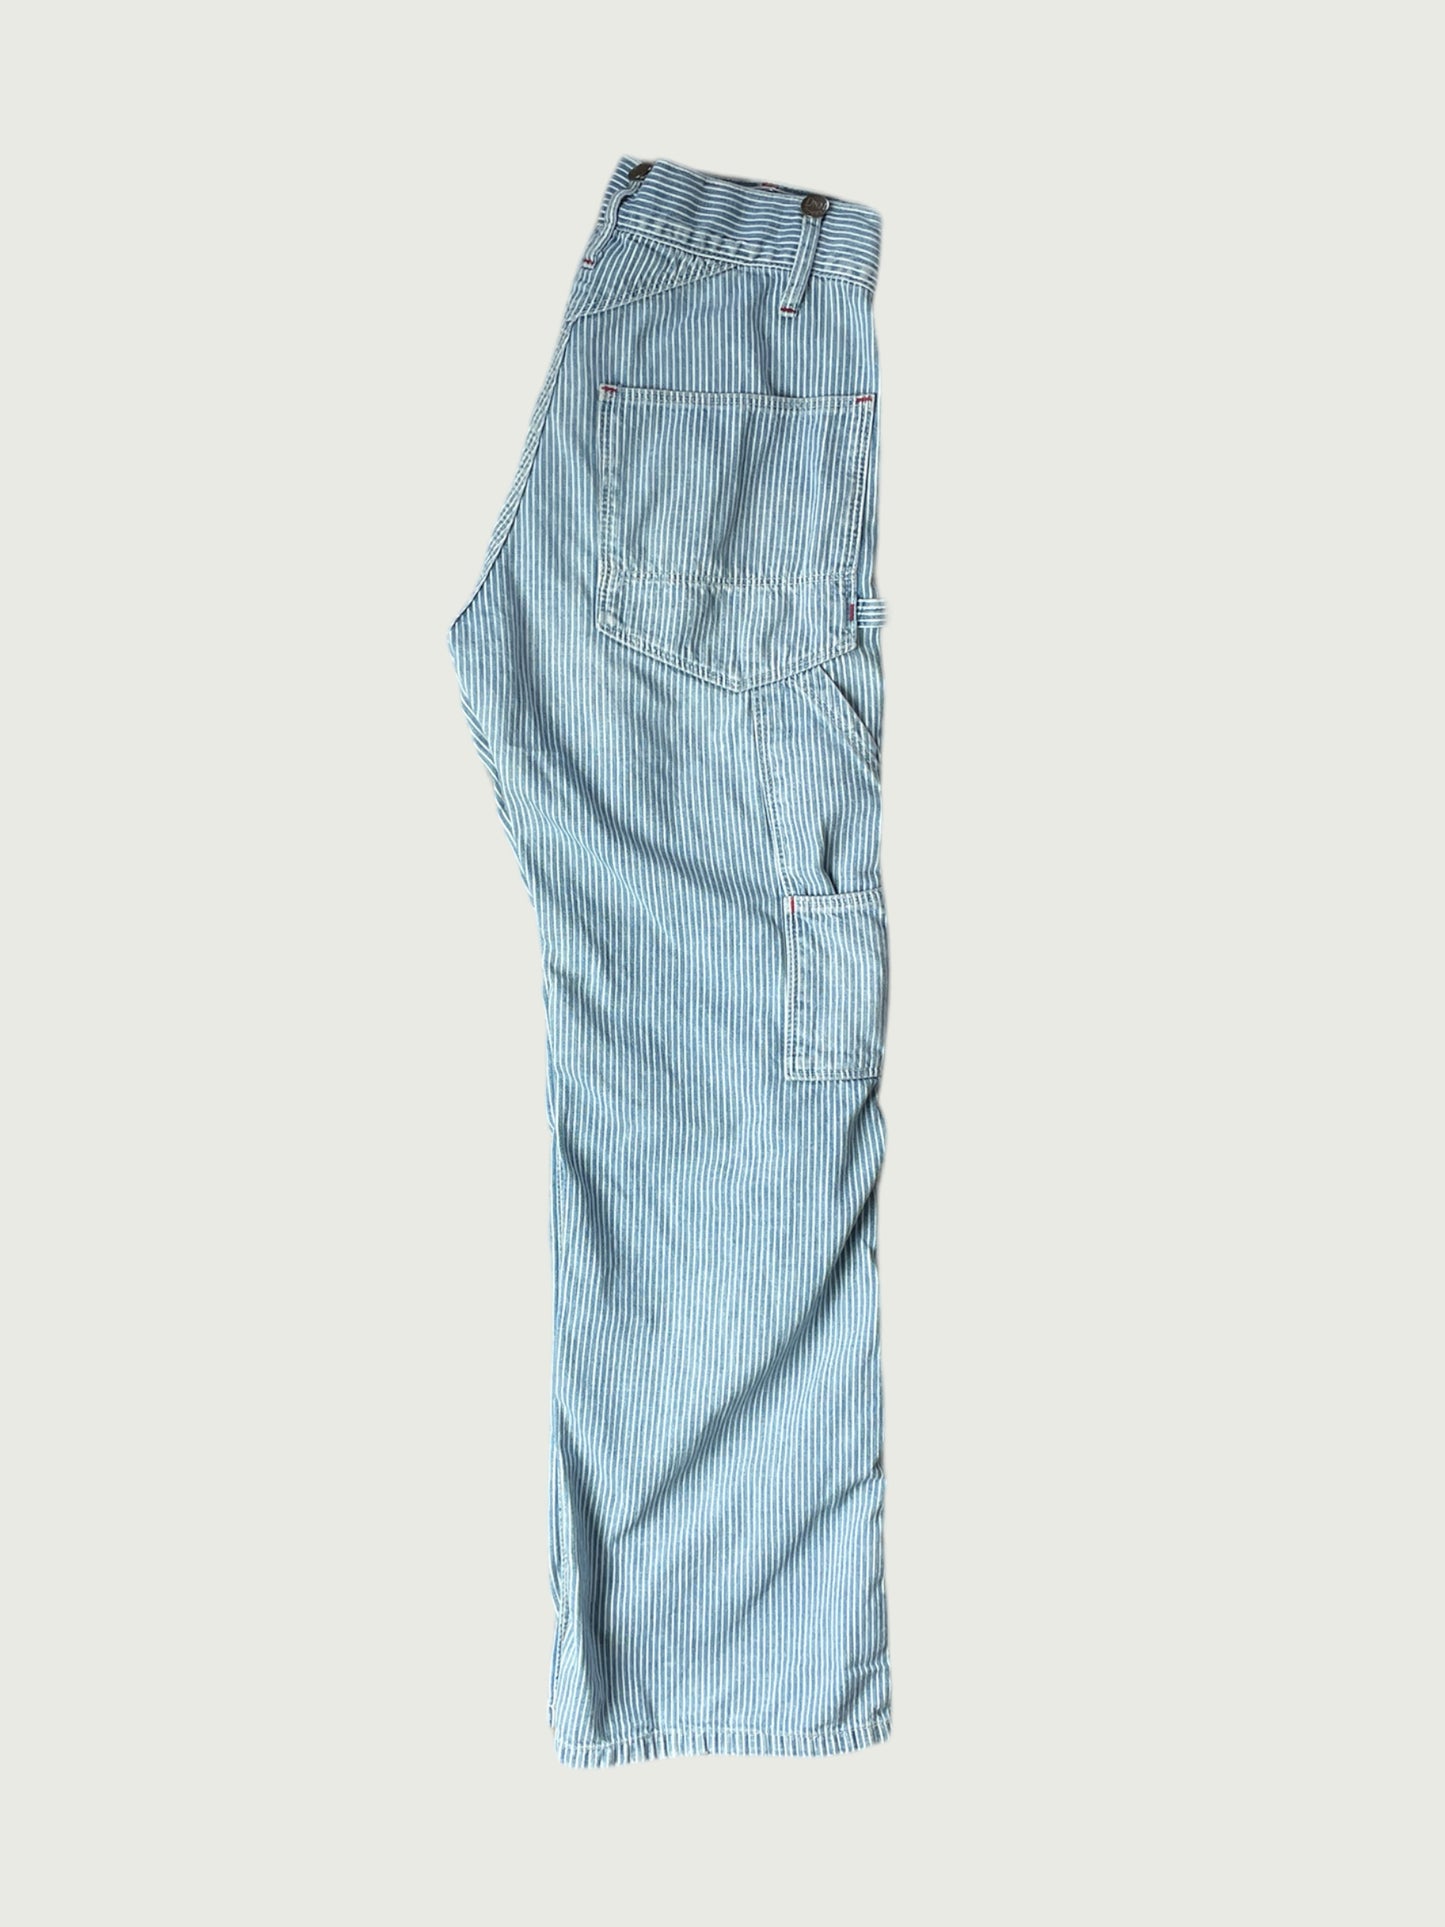 Vintage Denim Dungaree Railroad Stripe Pant